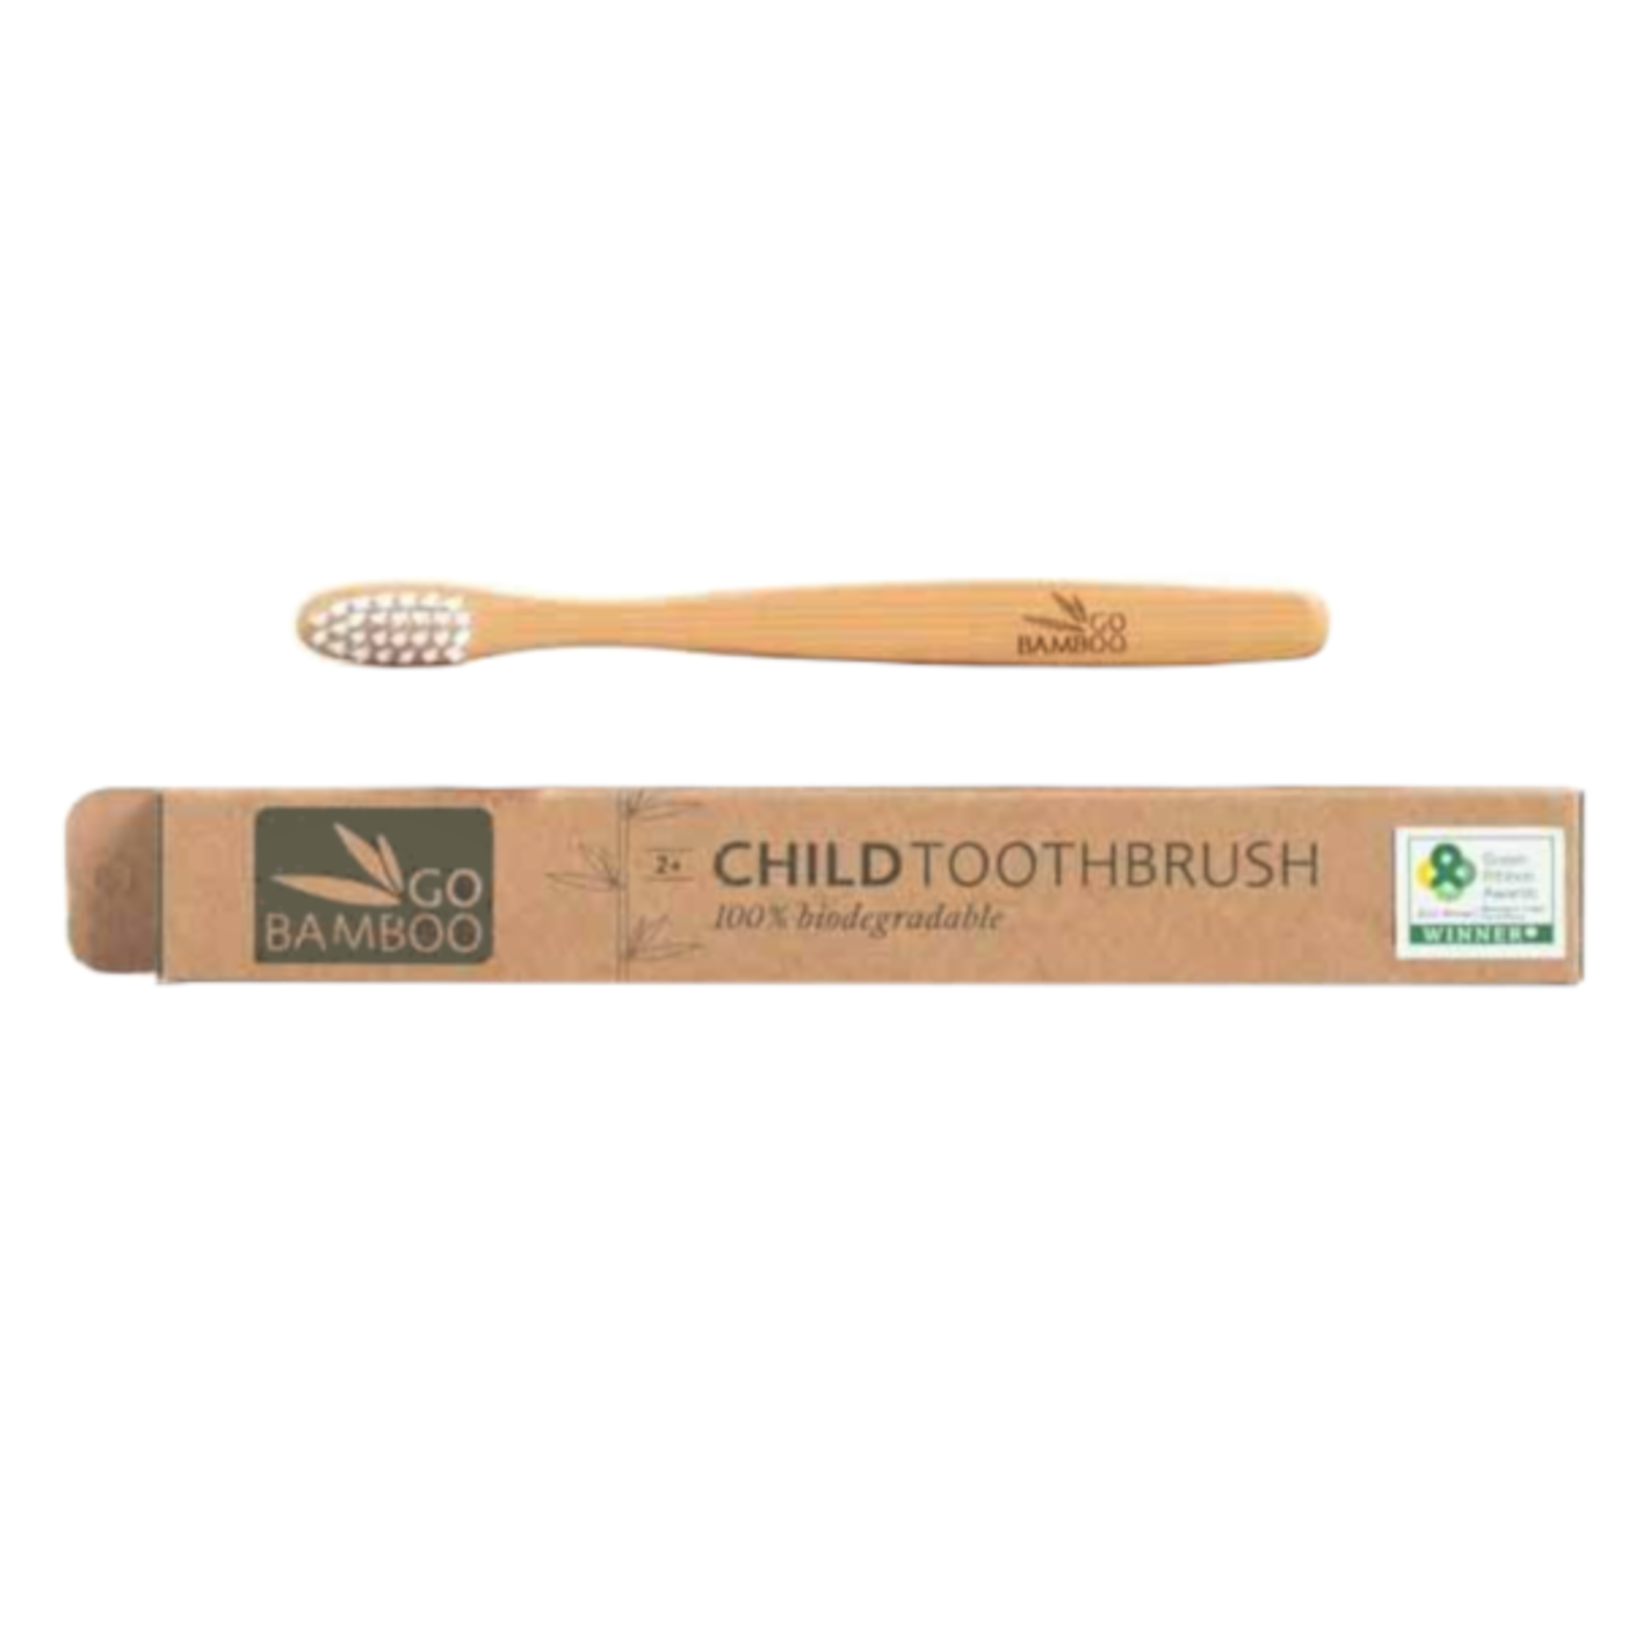 GoBamboo Toothbrush - Go Bamboo